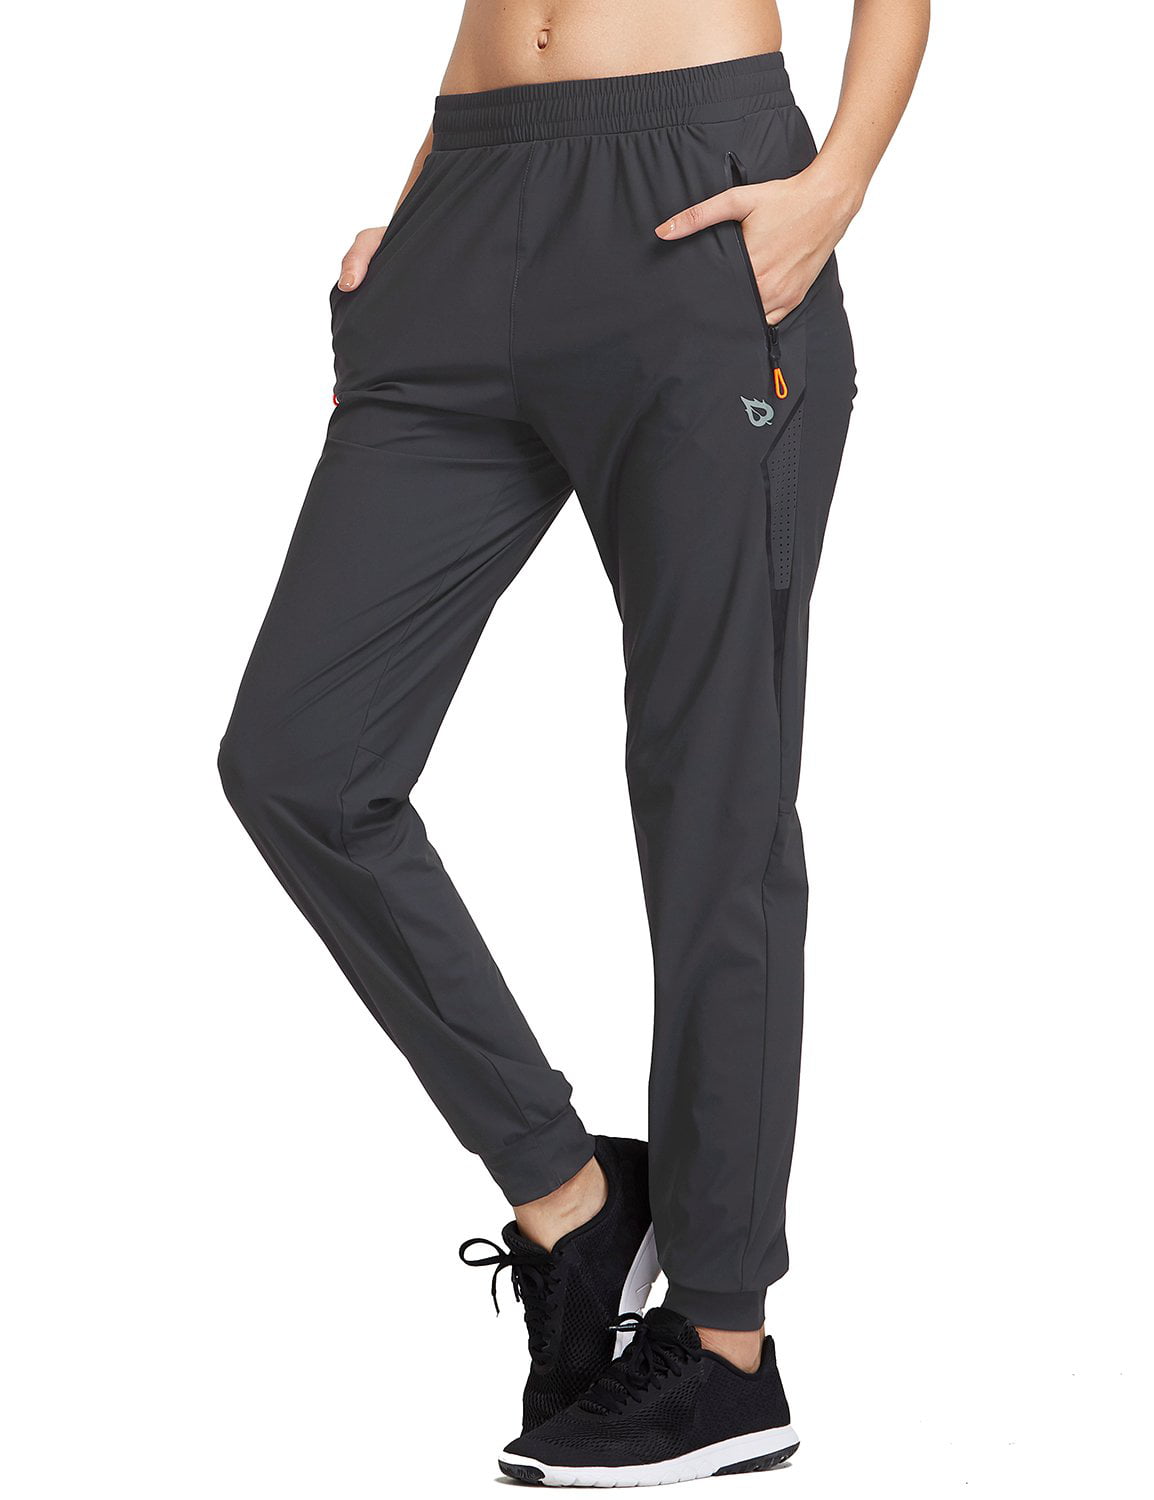 BALEAF Women's Fleece Lined Pants Sweat Casual Work Pull On Straight Leg Slacks with Zipper Pockets 